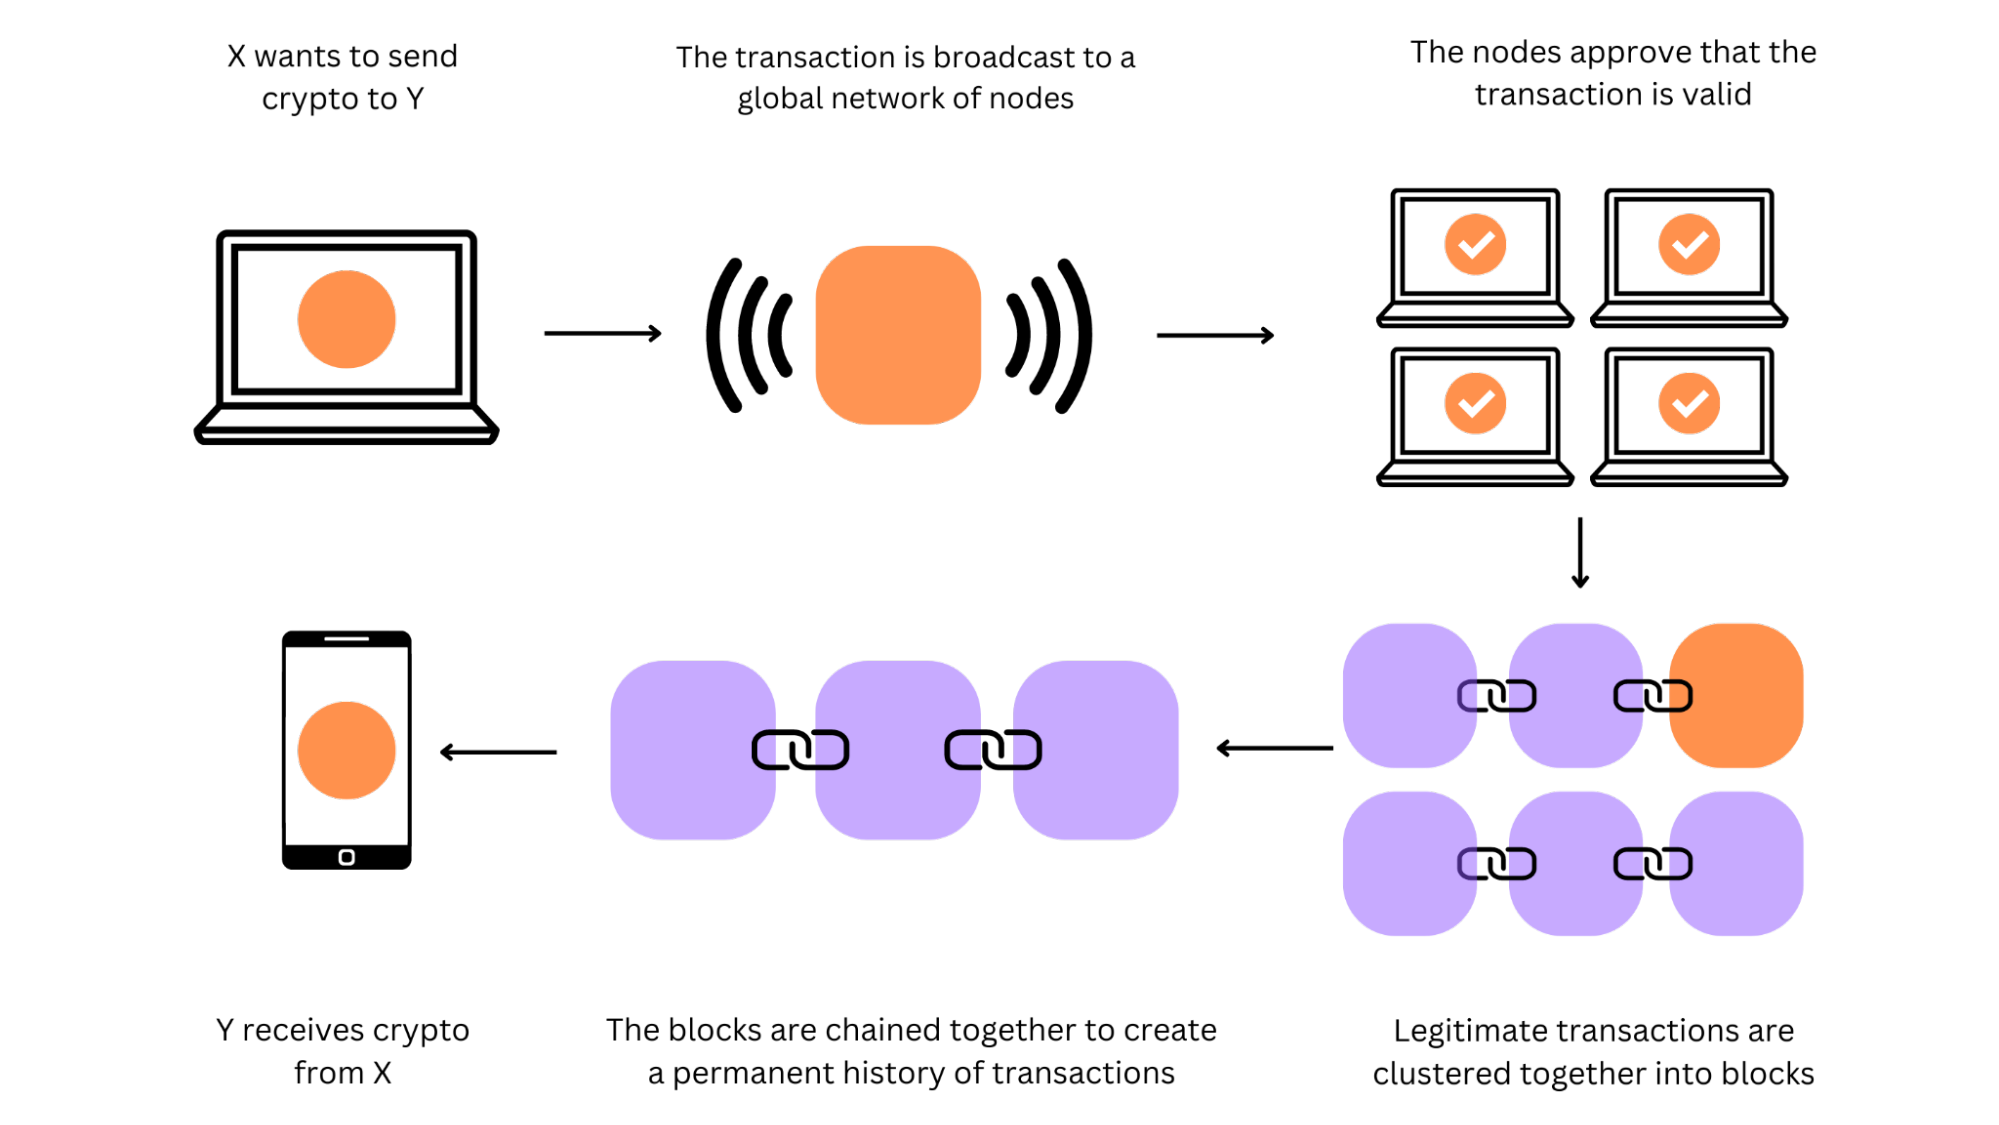 An illustration of how blockchain technology processes digital transactions.